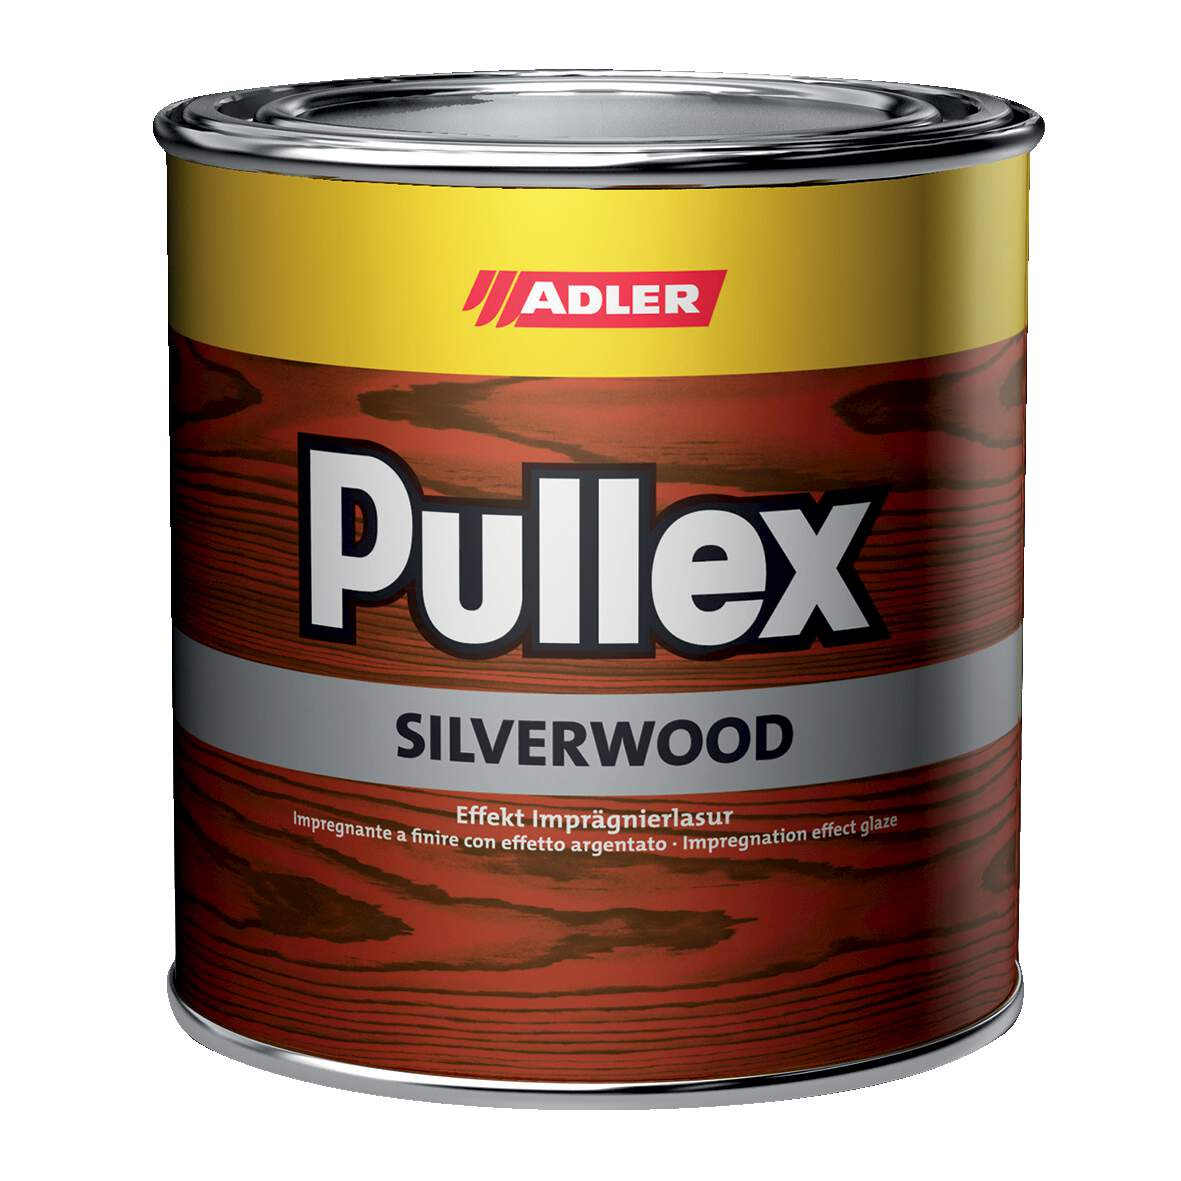 1095631 - Pullex-Silverwood silber 750ml